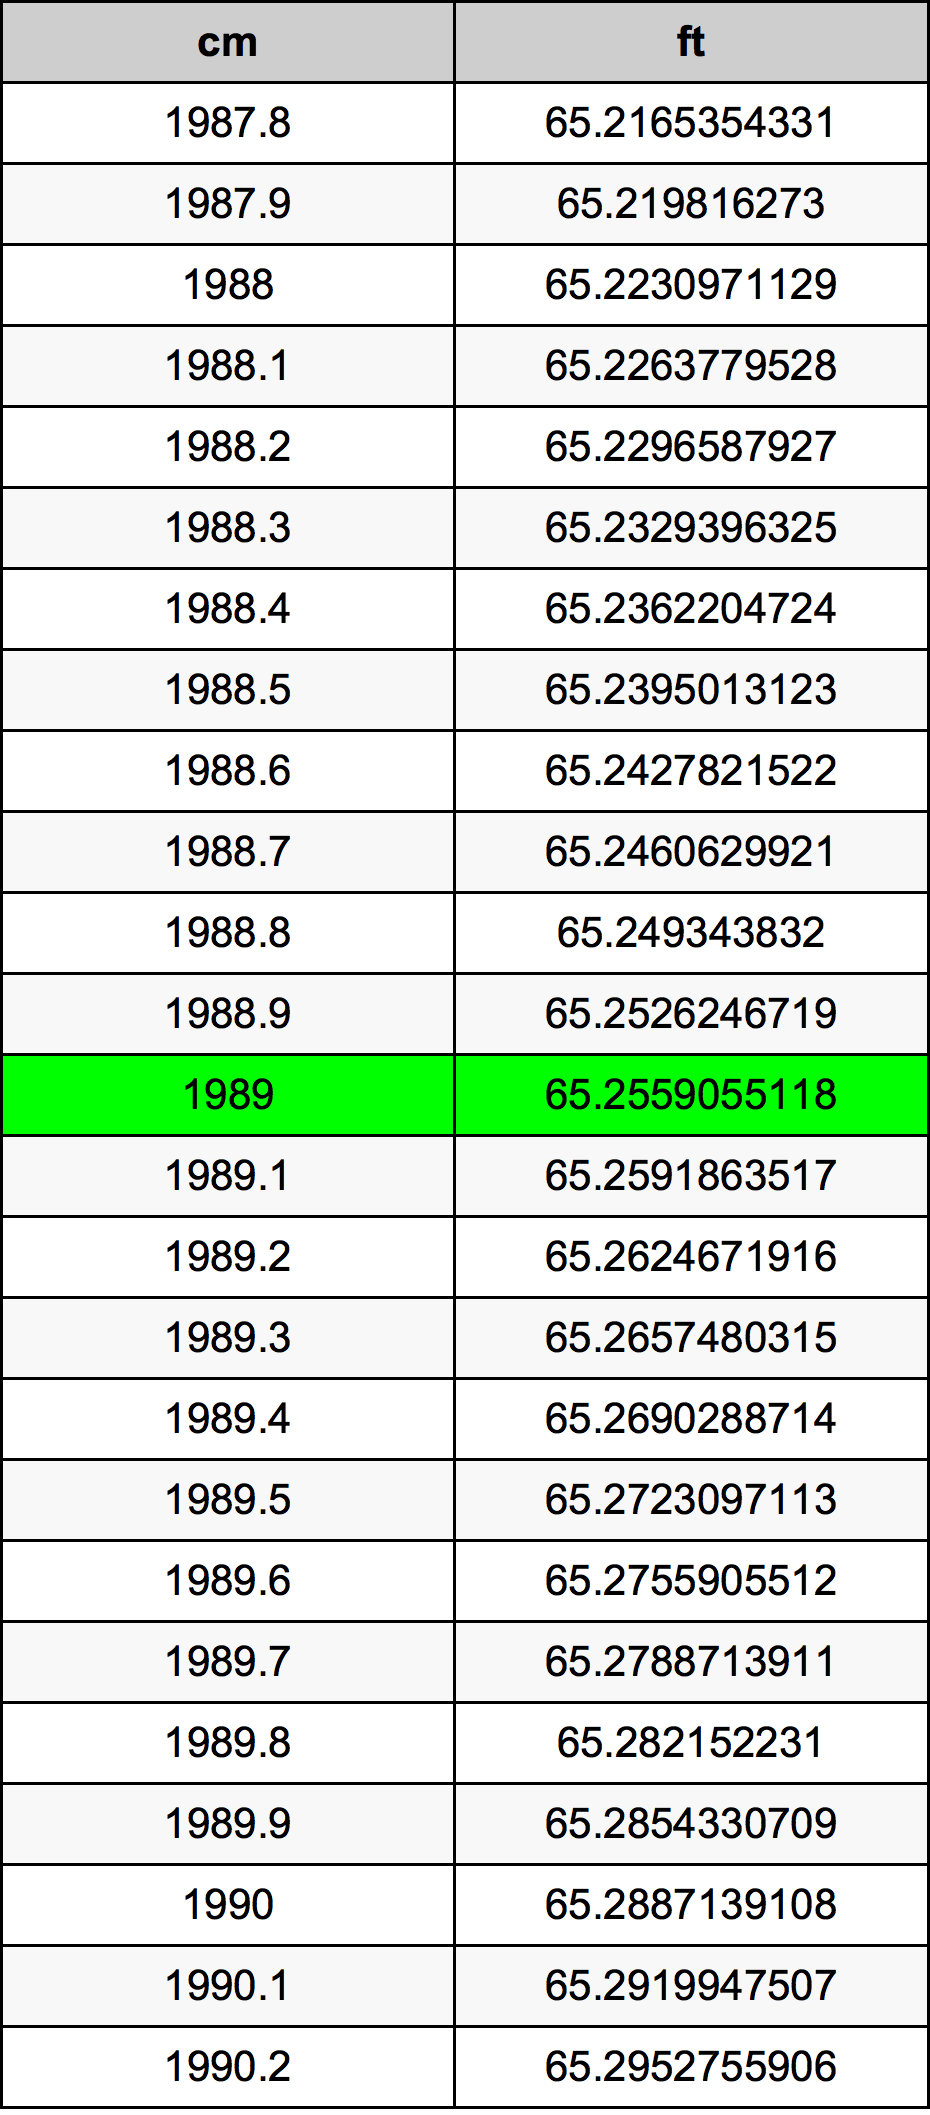 1989 Centimeter Table